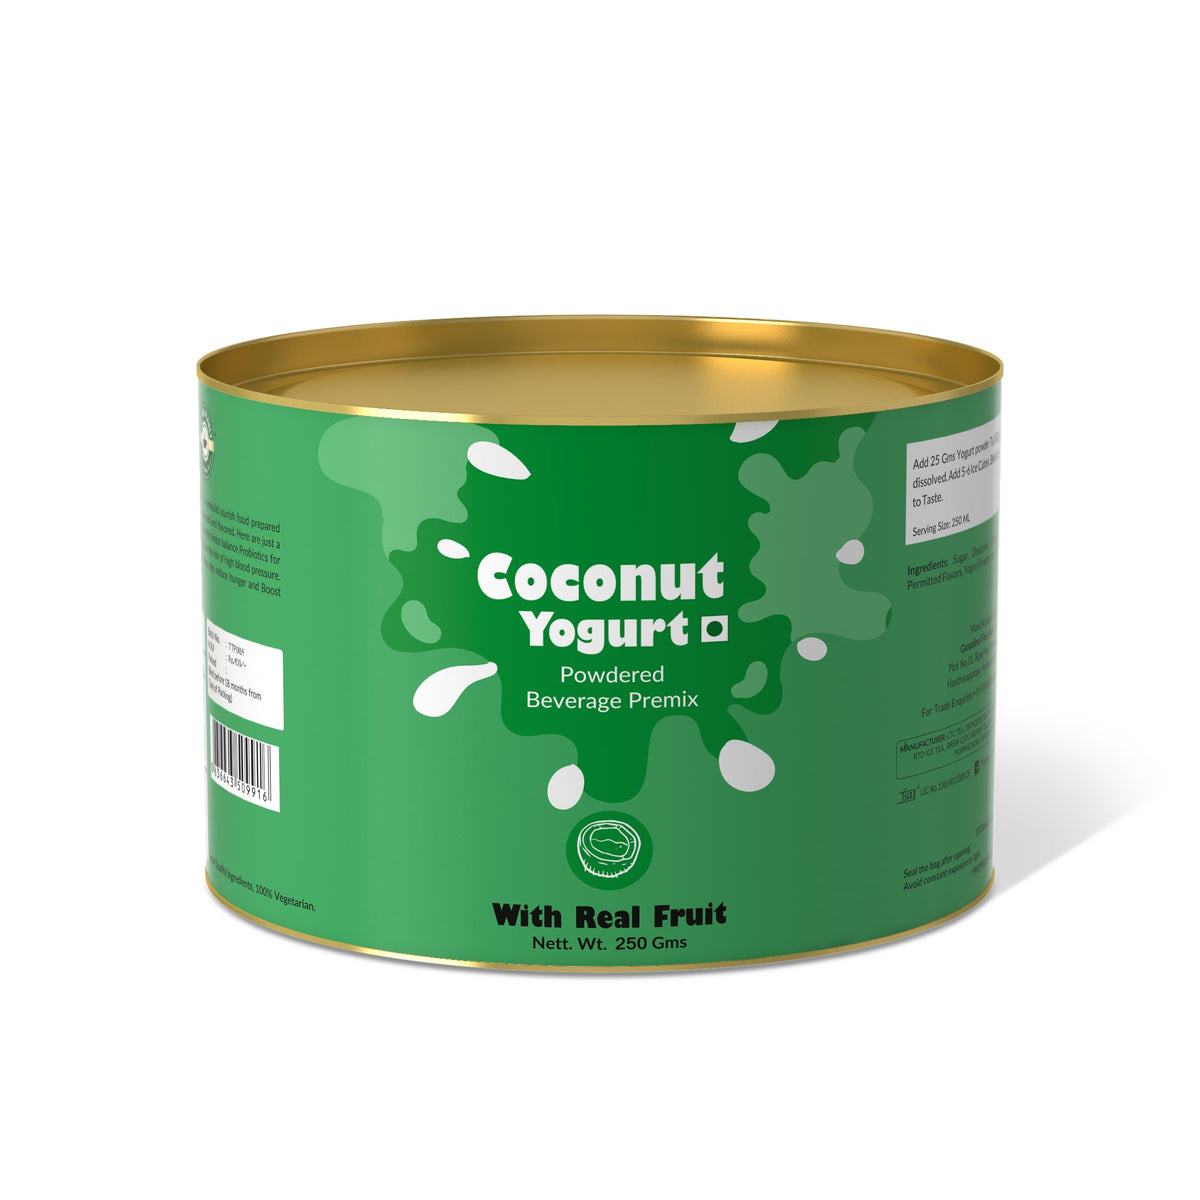 Coconut Yogurt Mix